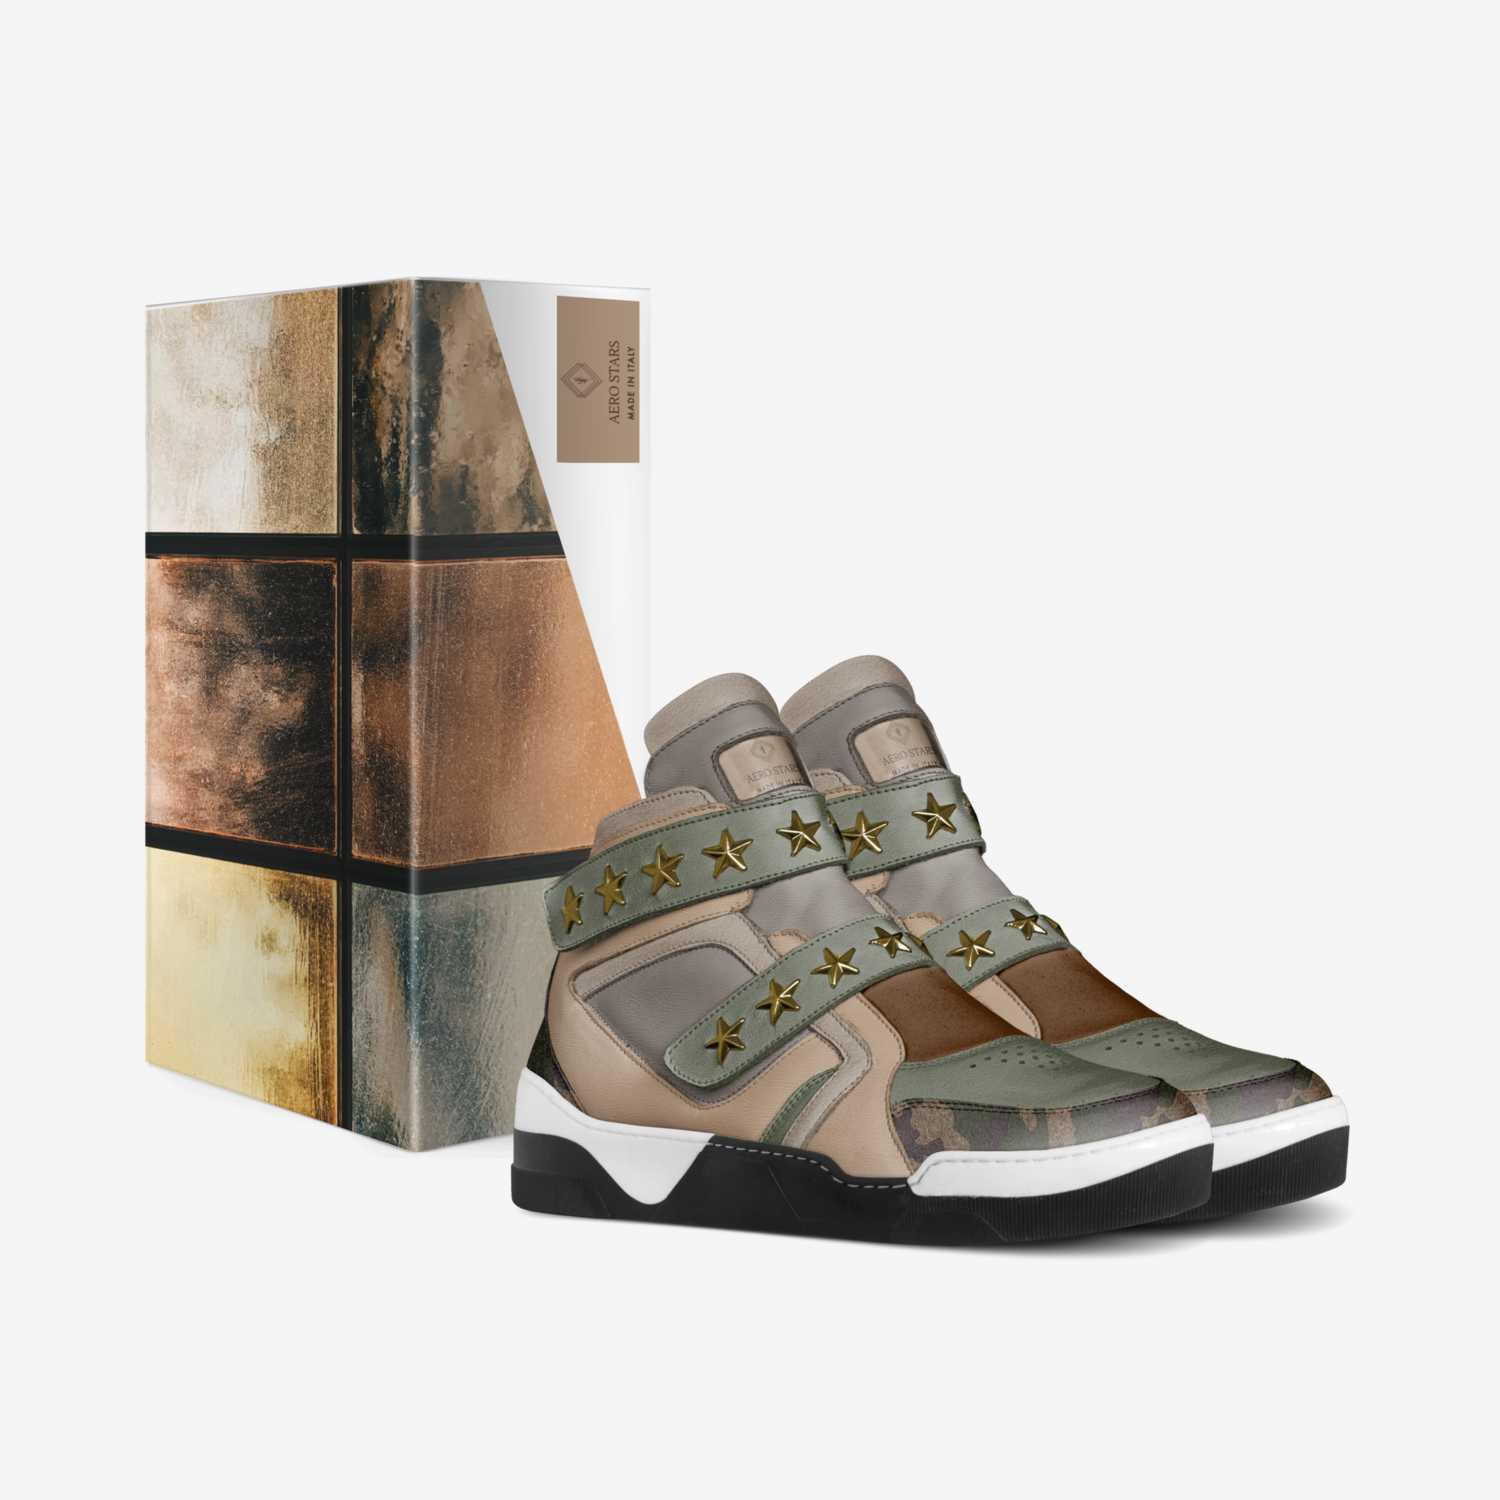 Aero Stars custom made in Italy shoes by Aristotle Hendricks | Box view